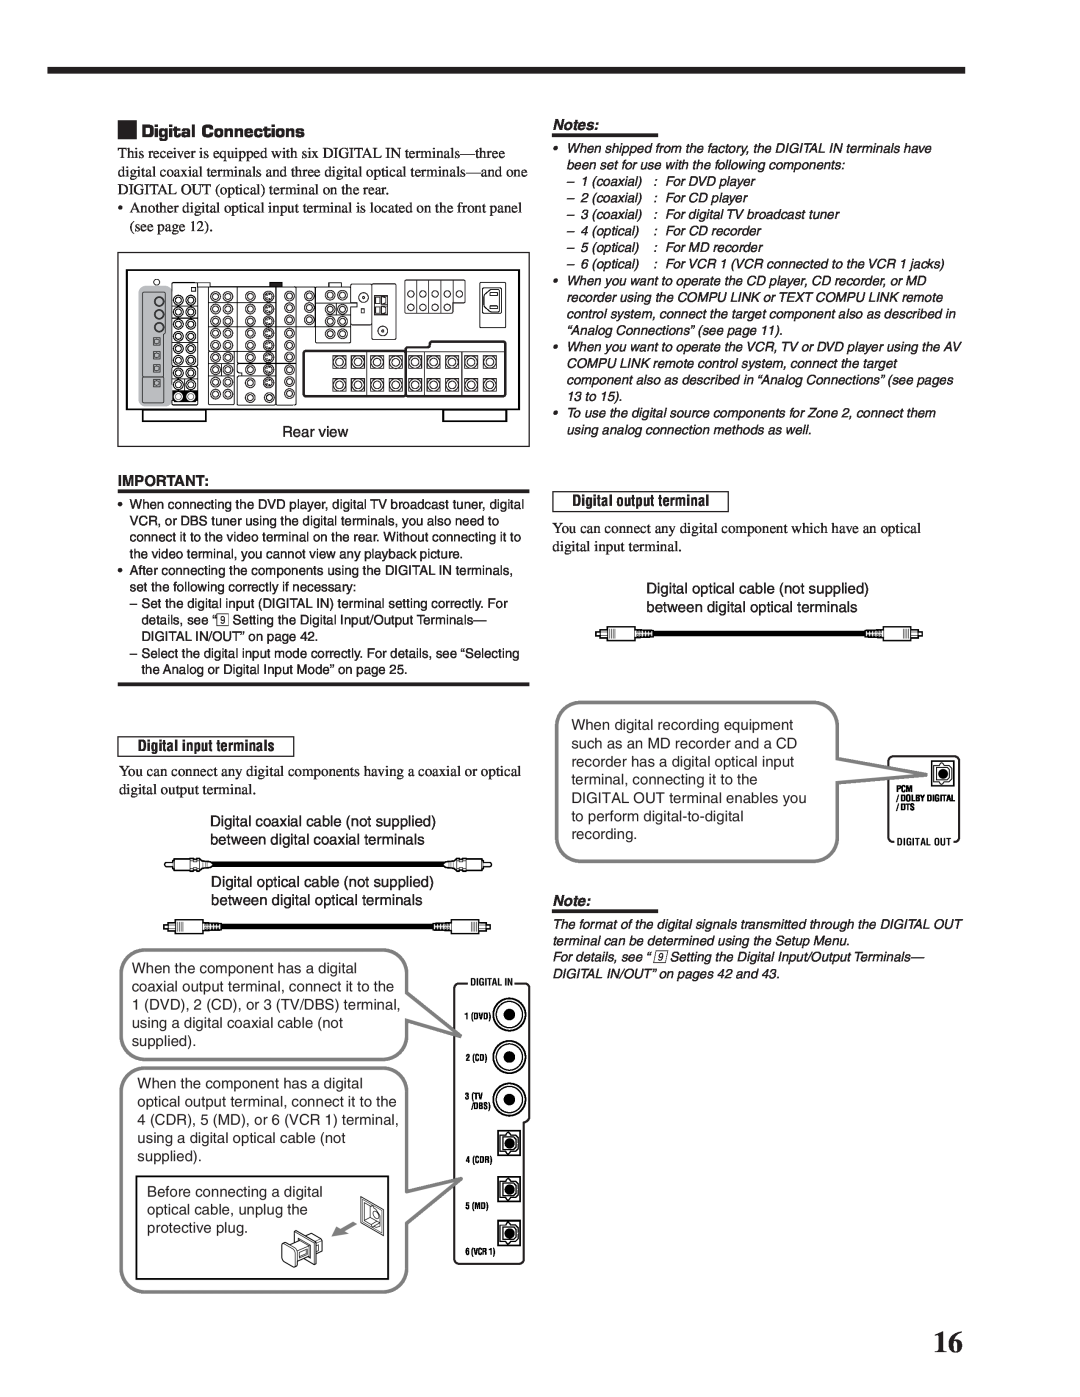 JVC RX-DP20VBK manual Digital Connections, Notes, Digital output terminal, Digital input terminals 